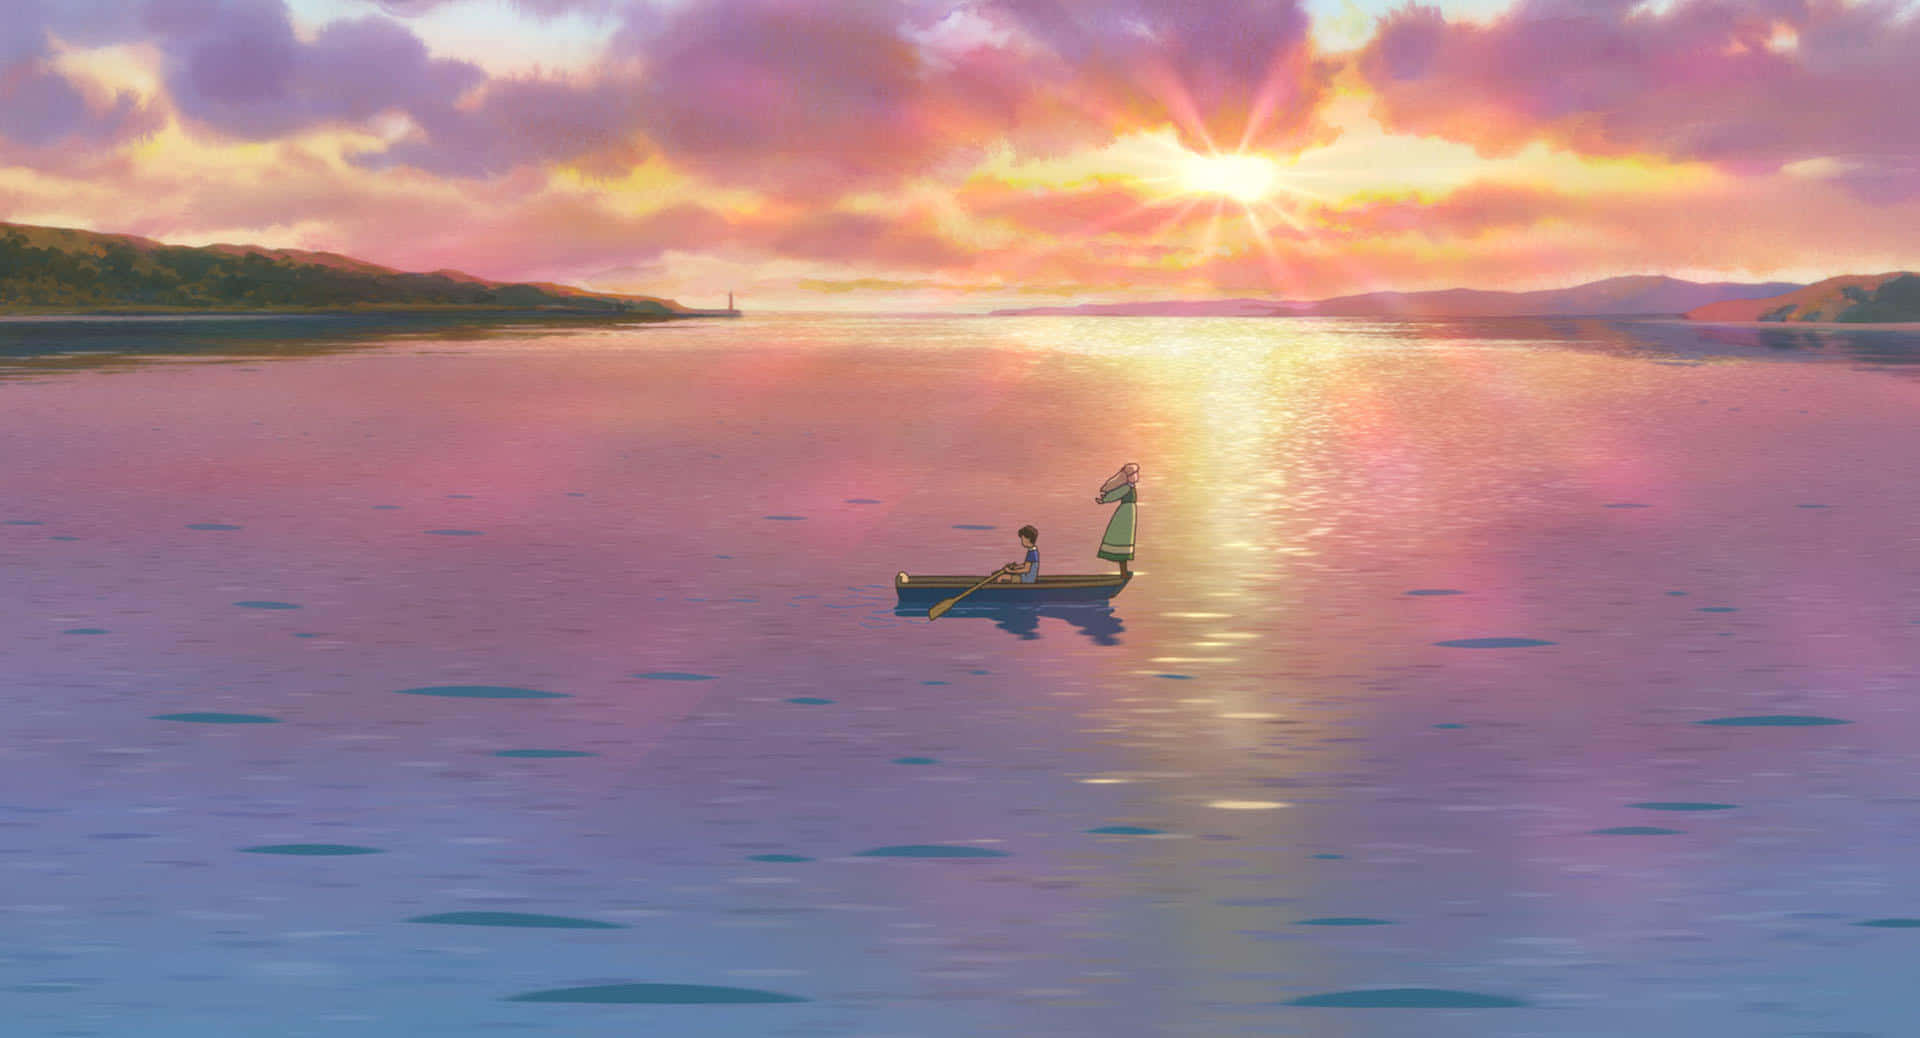 Enchanting Studio Ghibli Landscape